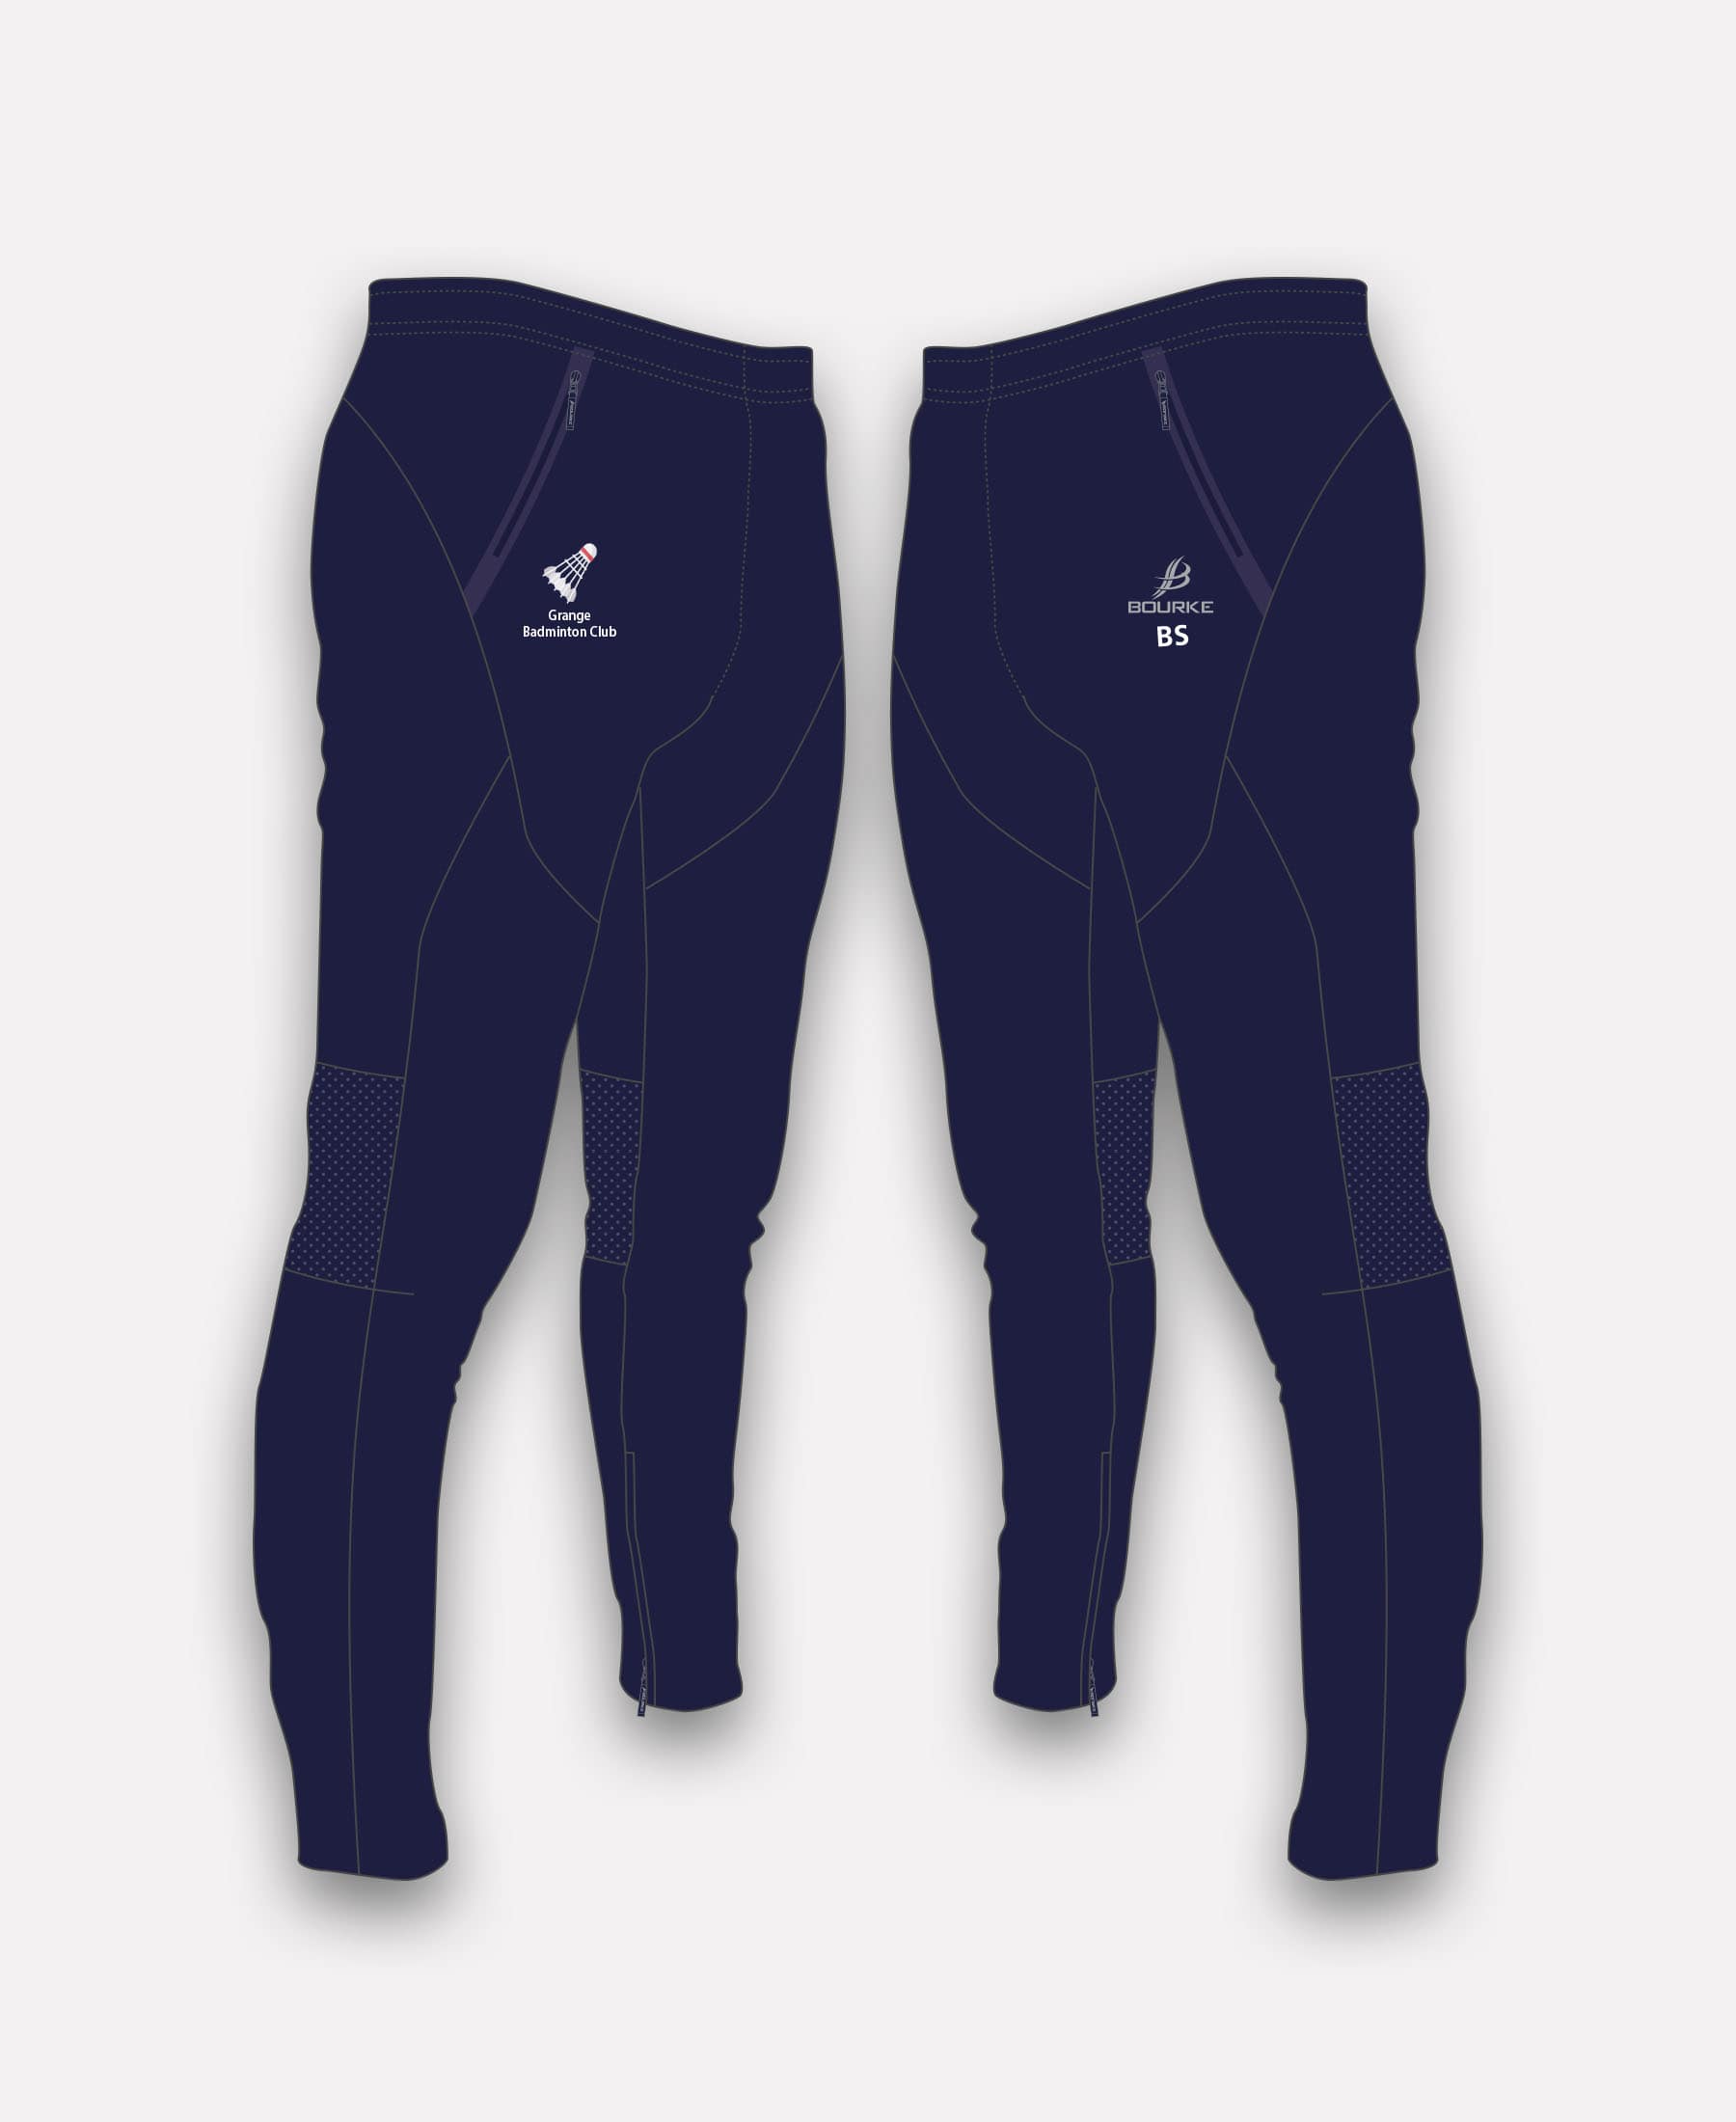 Grange Badminton Croga Skinny Pants (Navy)